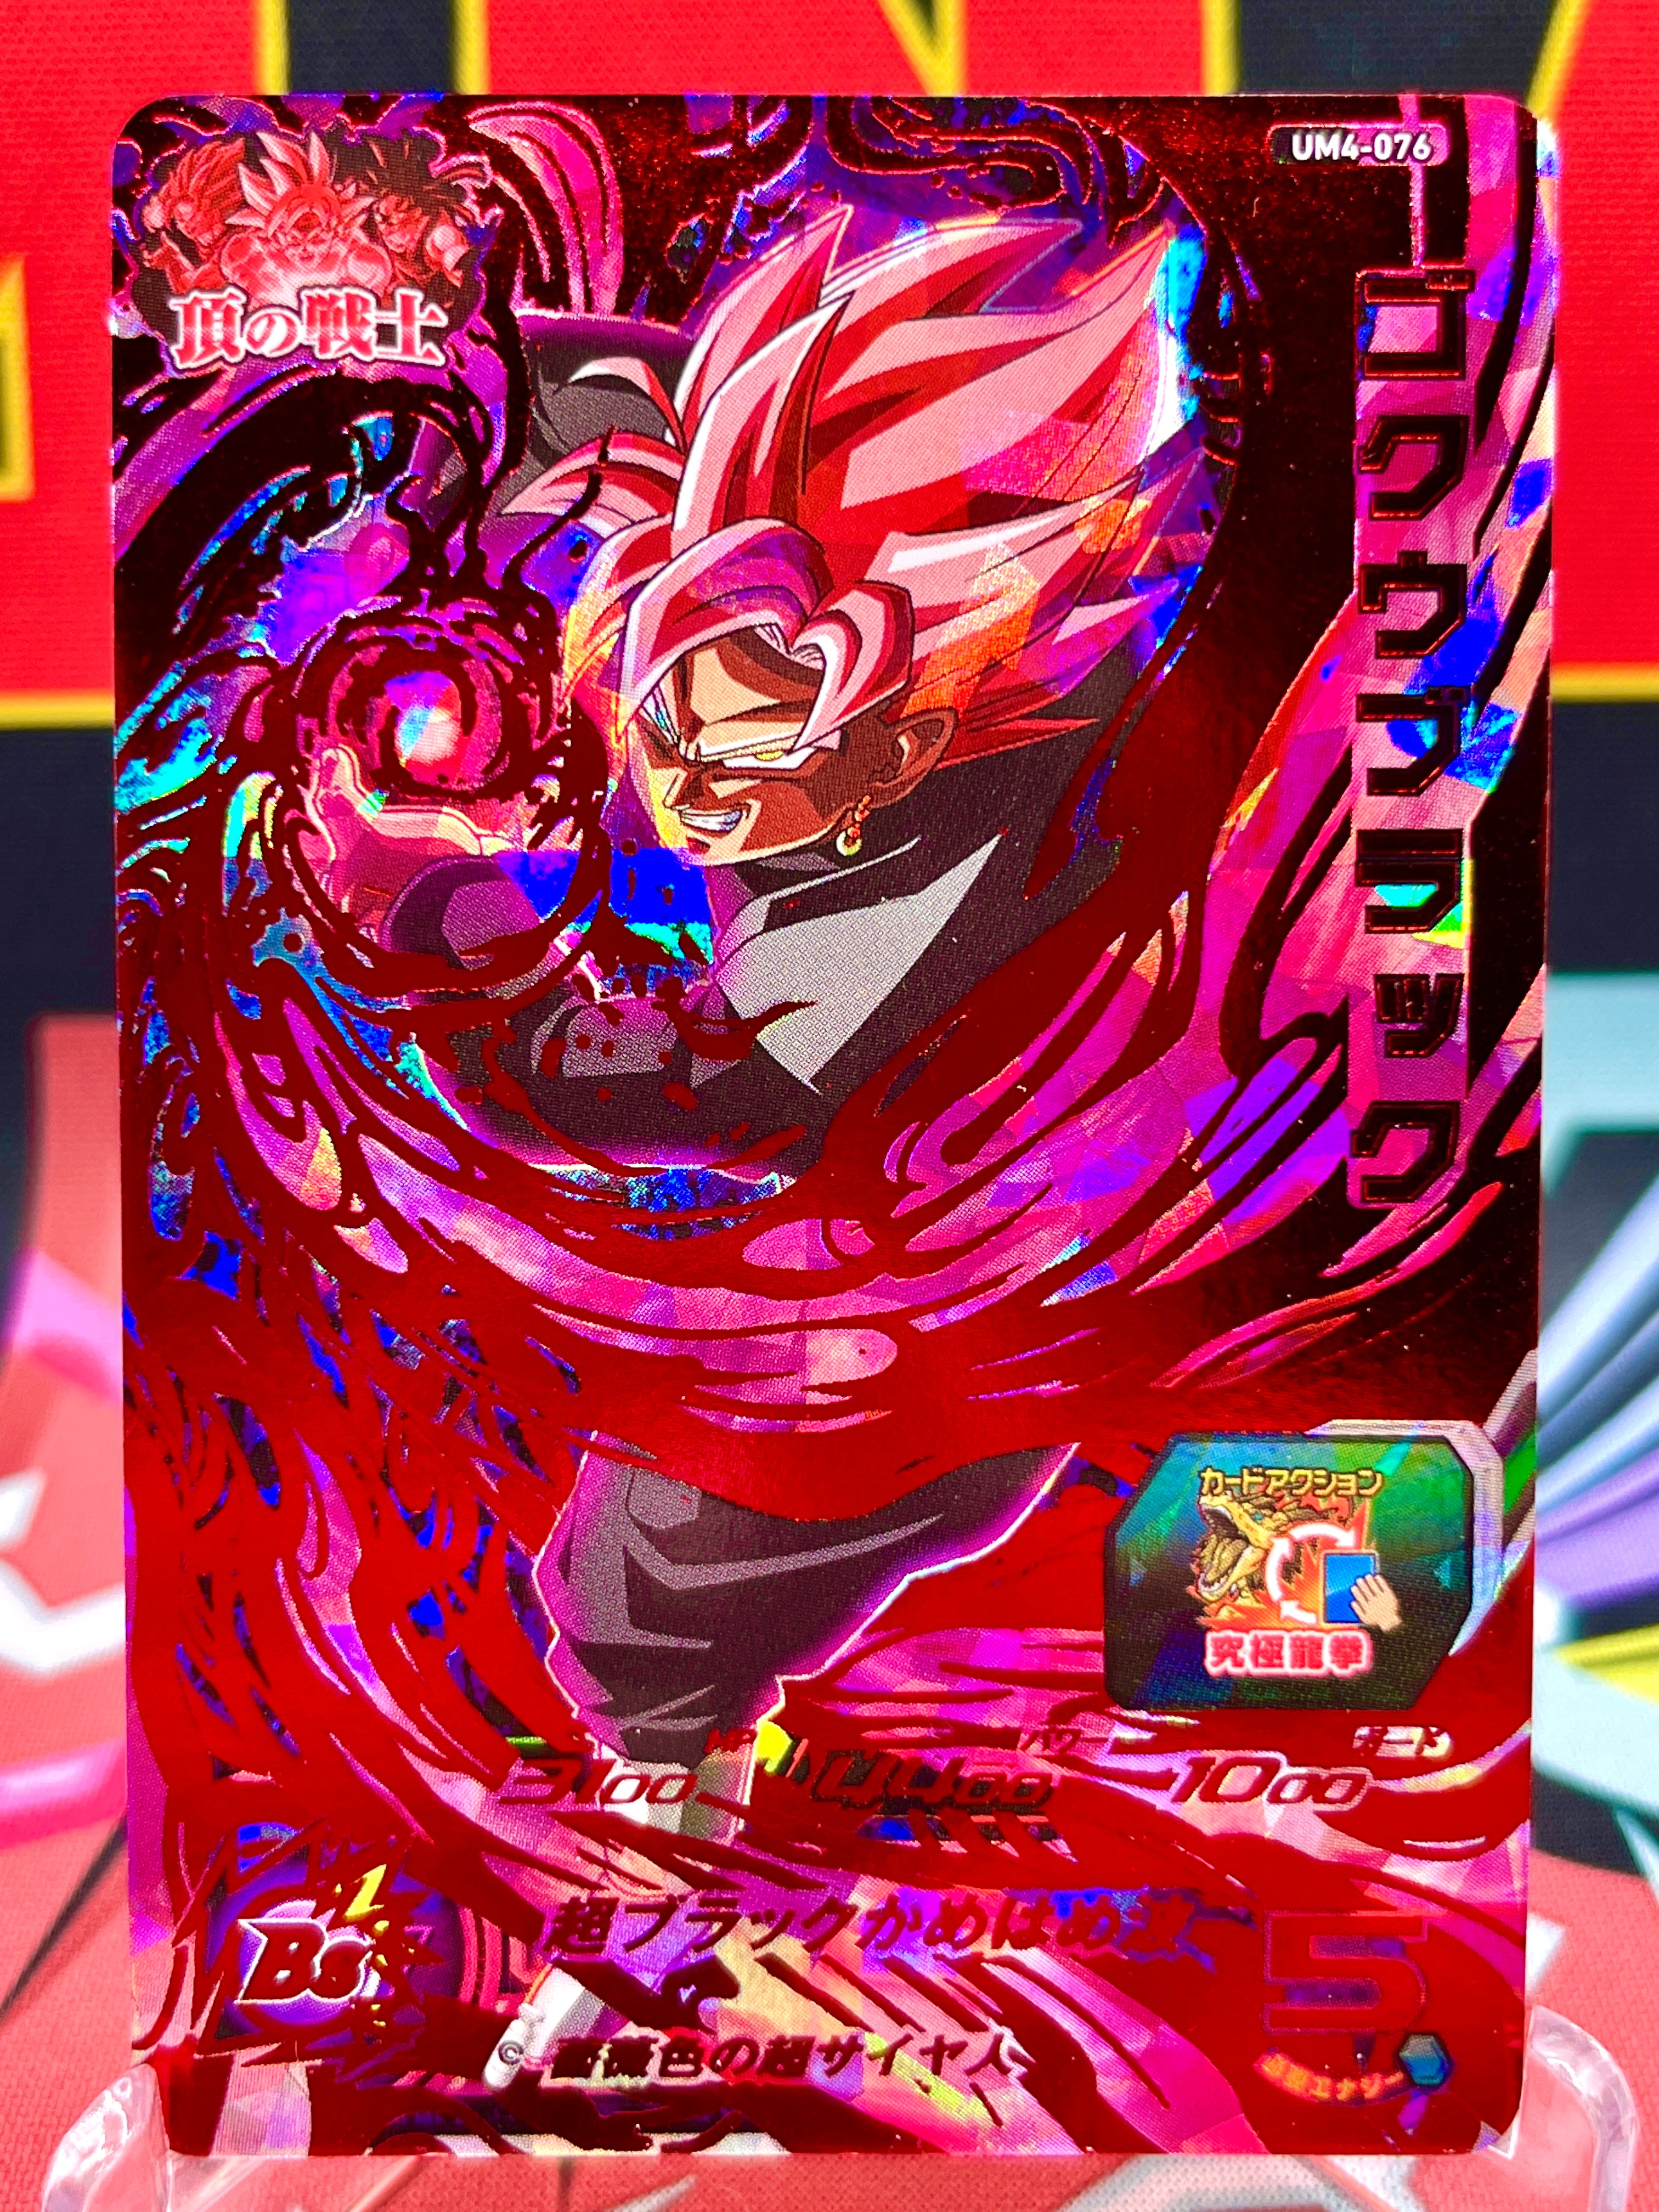 UM4-076 Goku Black UR (2018)